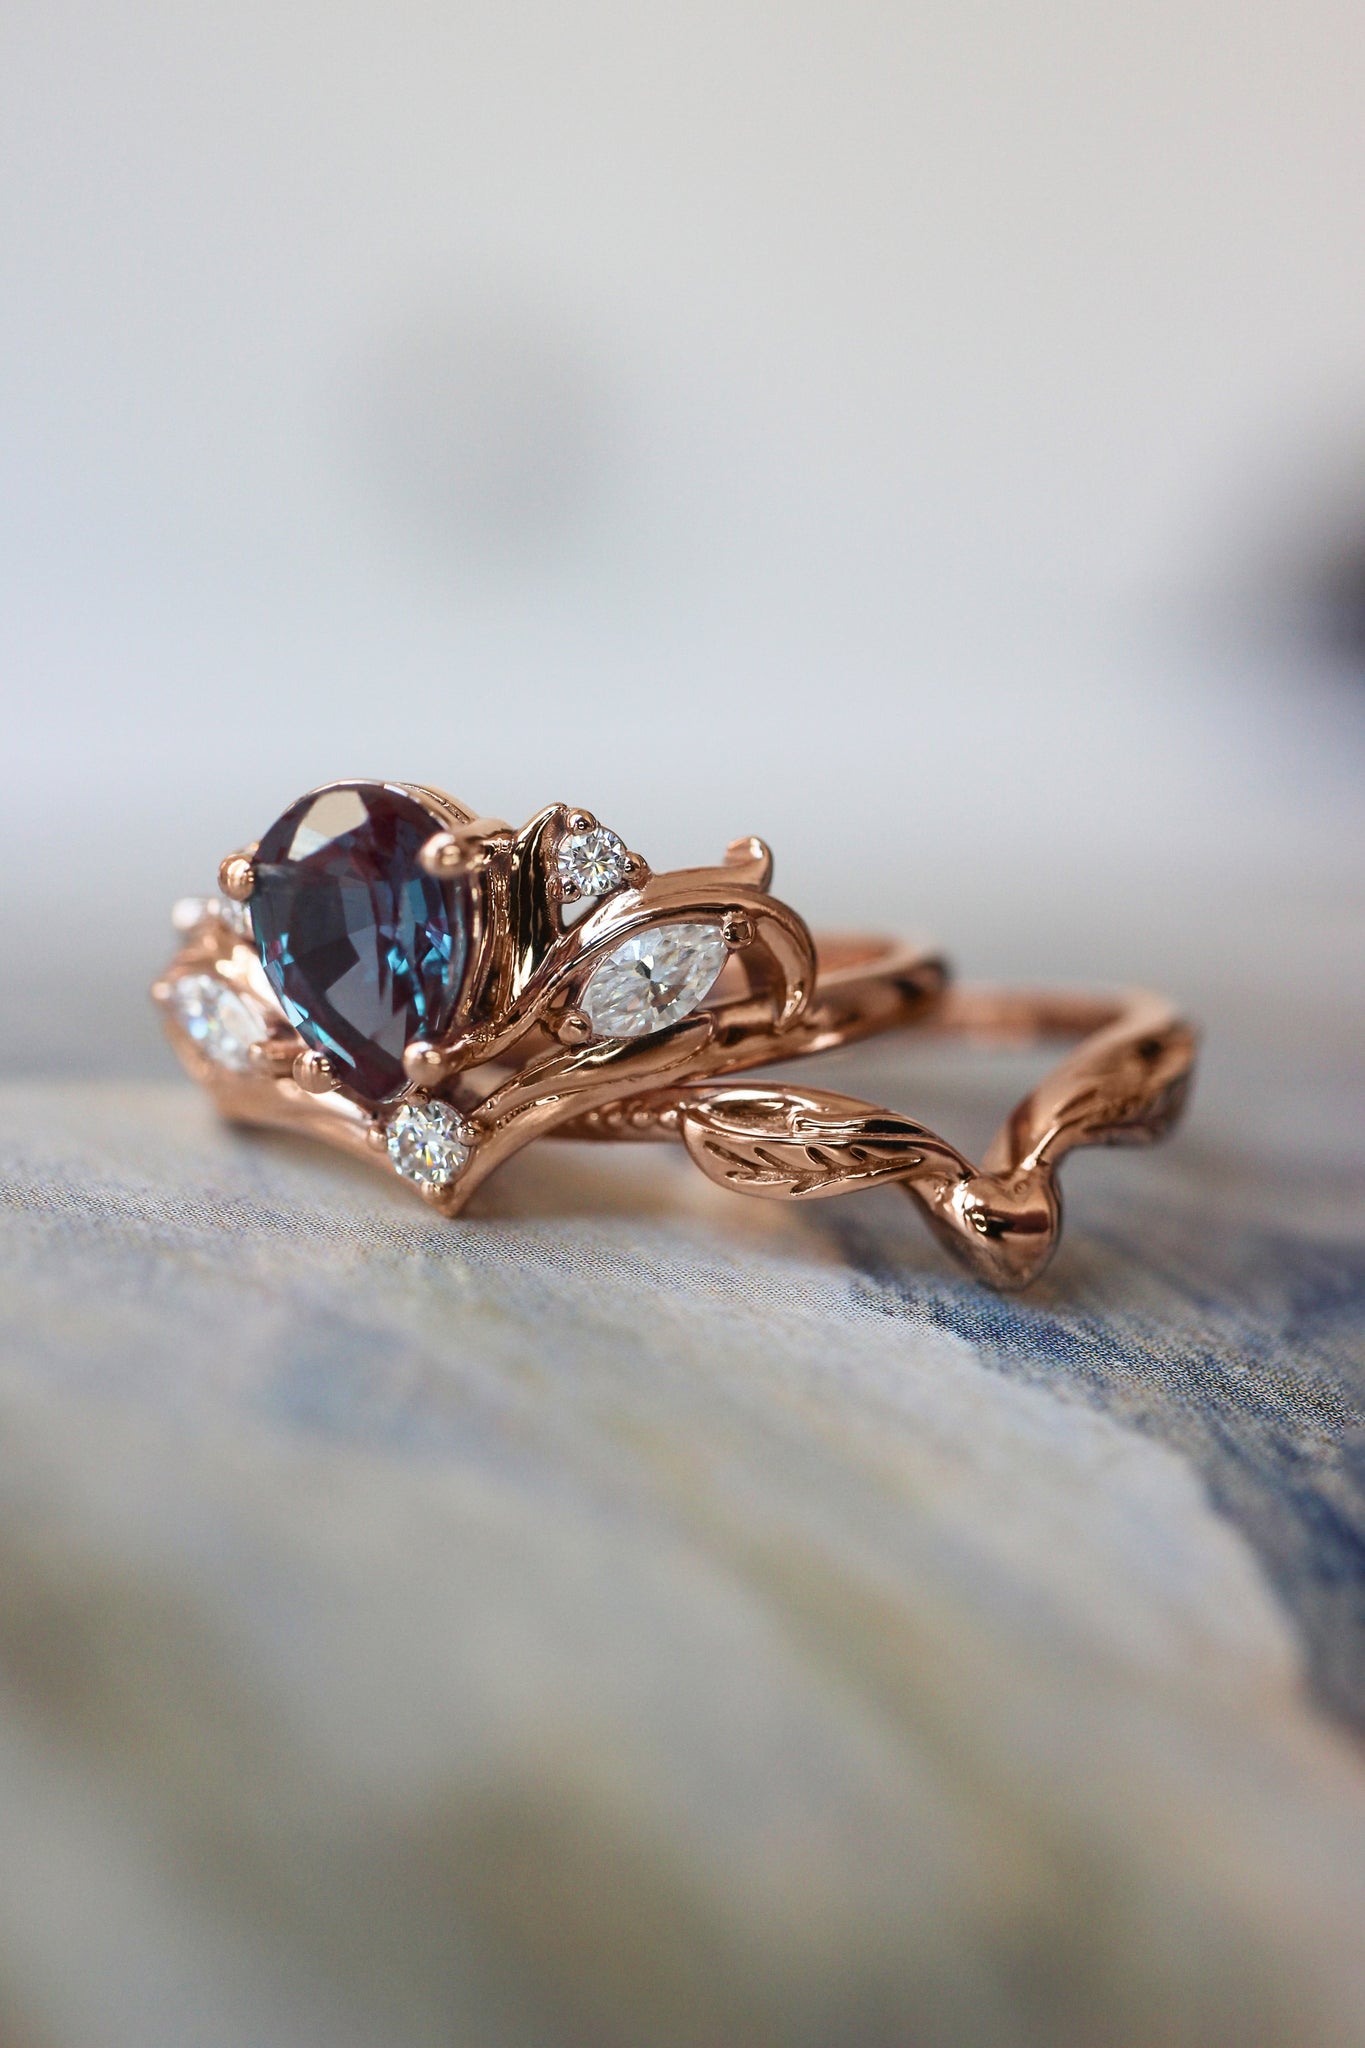 Bridal ring set with pear cut alexandrite / Swanlake - Eden Garden Jewelry™